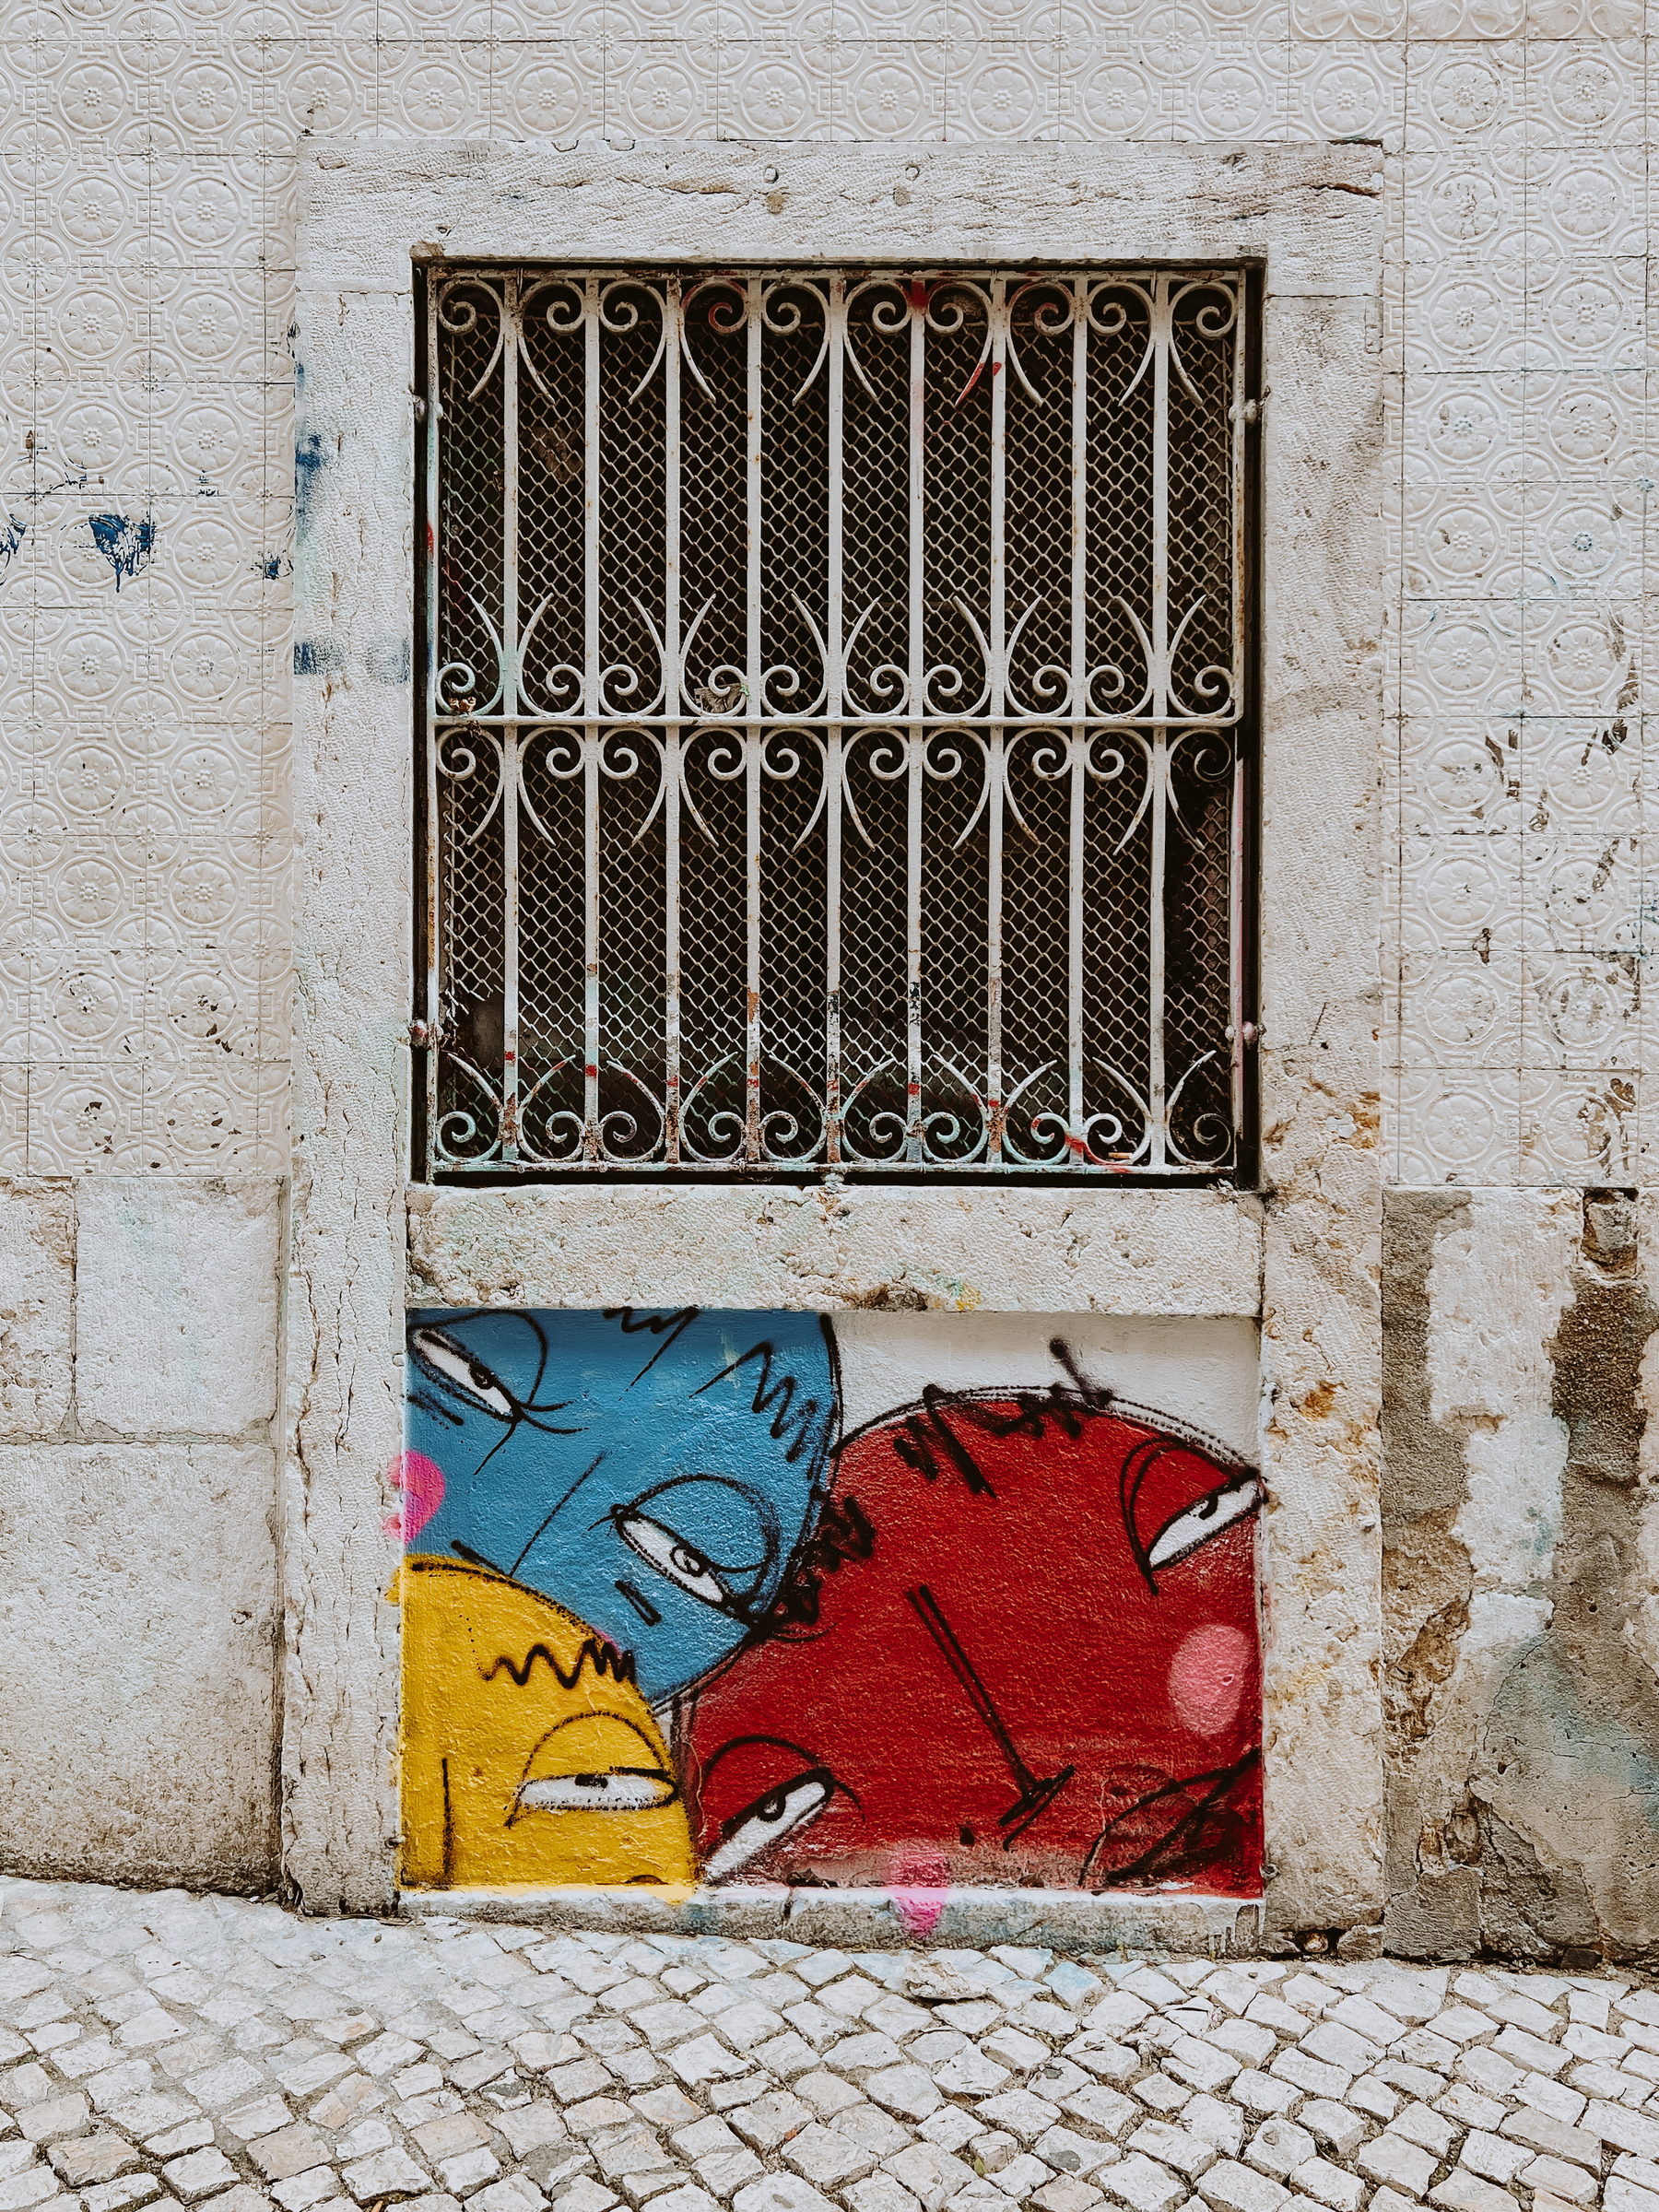 Street art. Three cartoony faces are graffitied under a window. The window has bars.